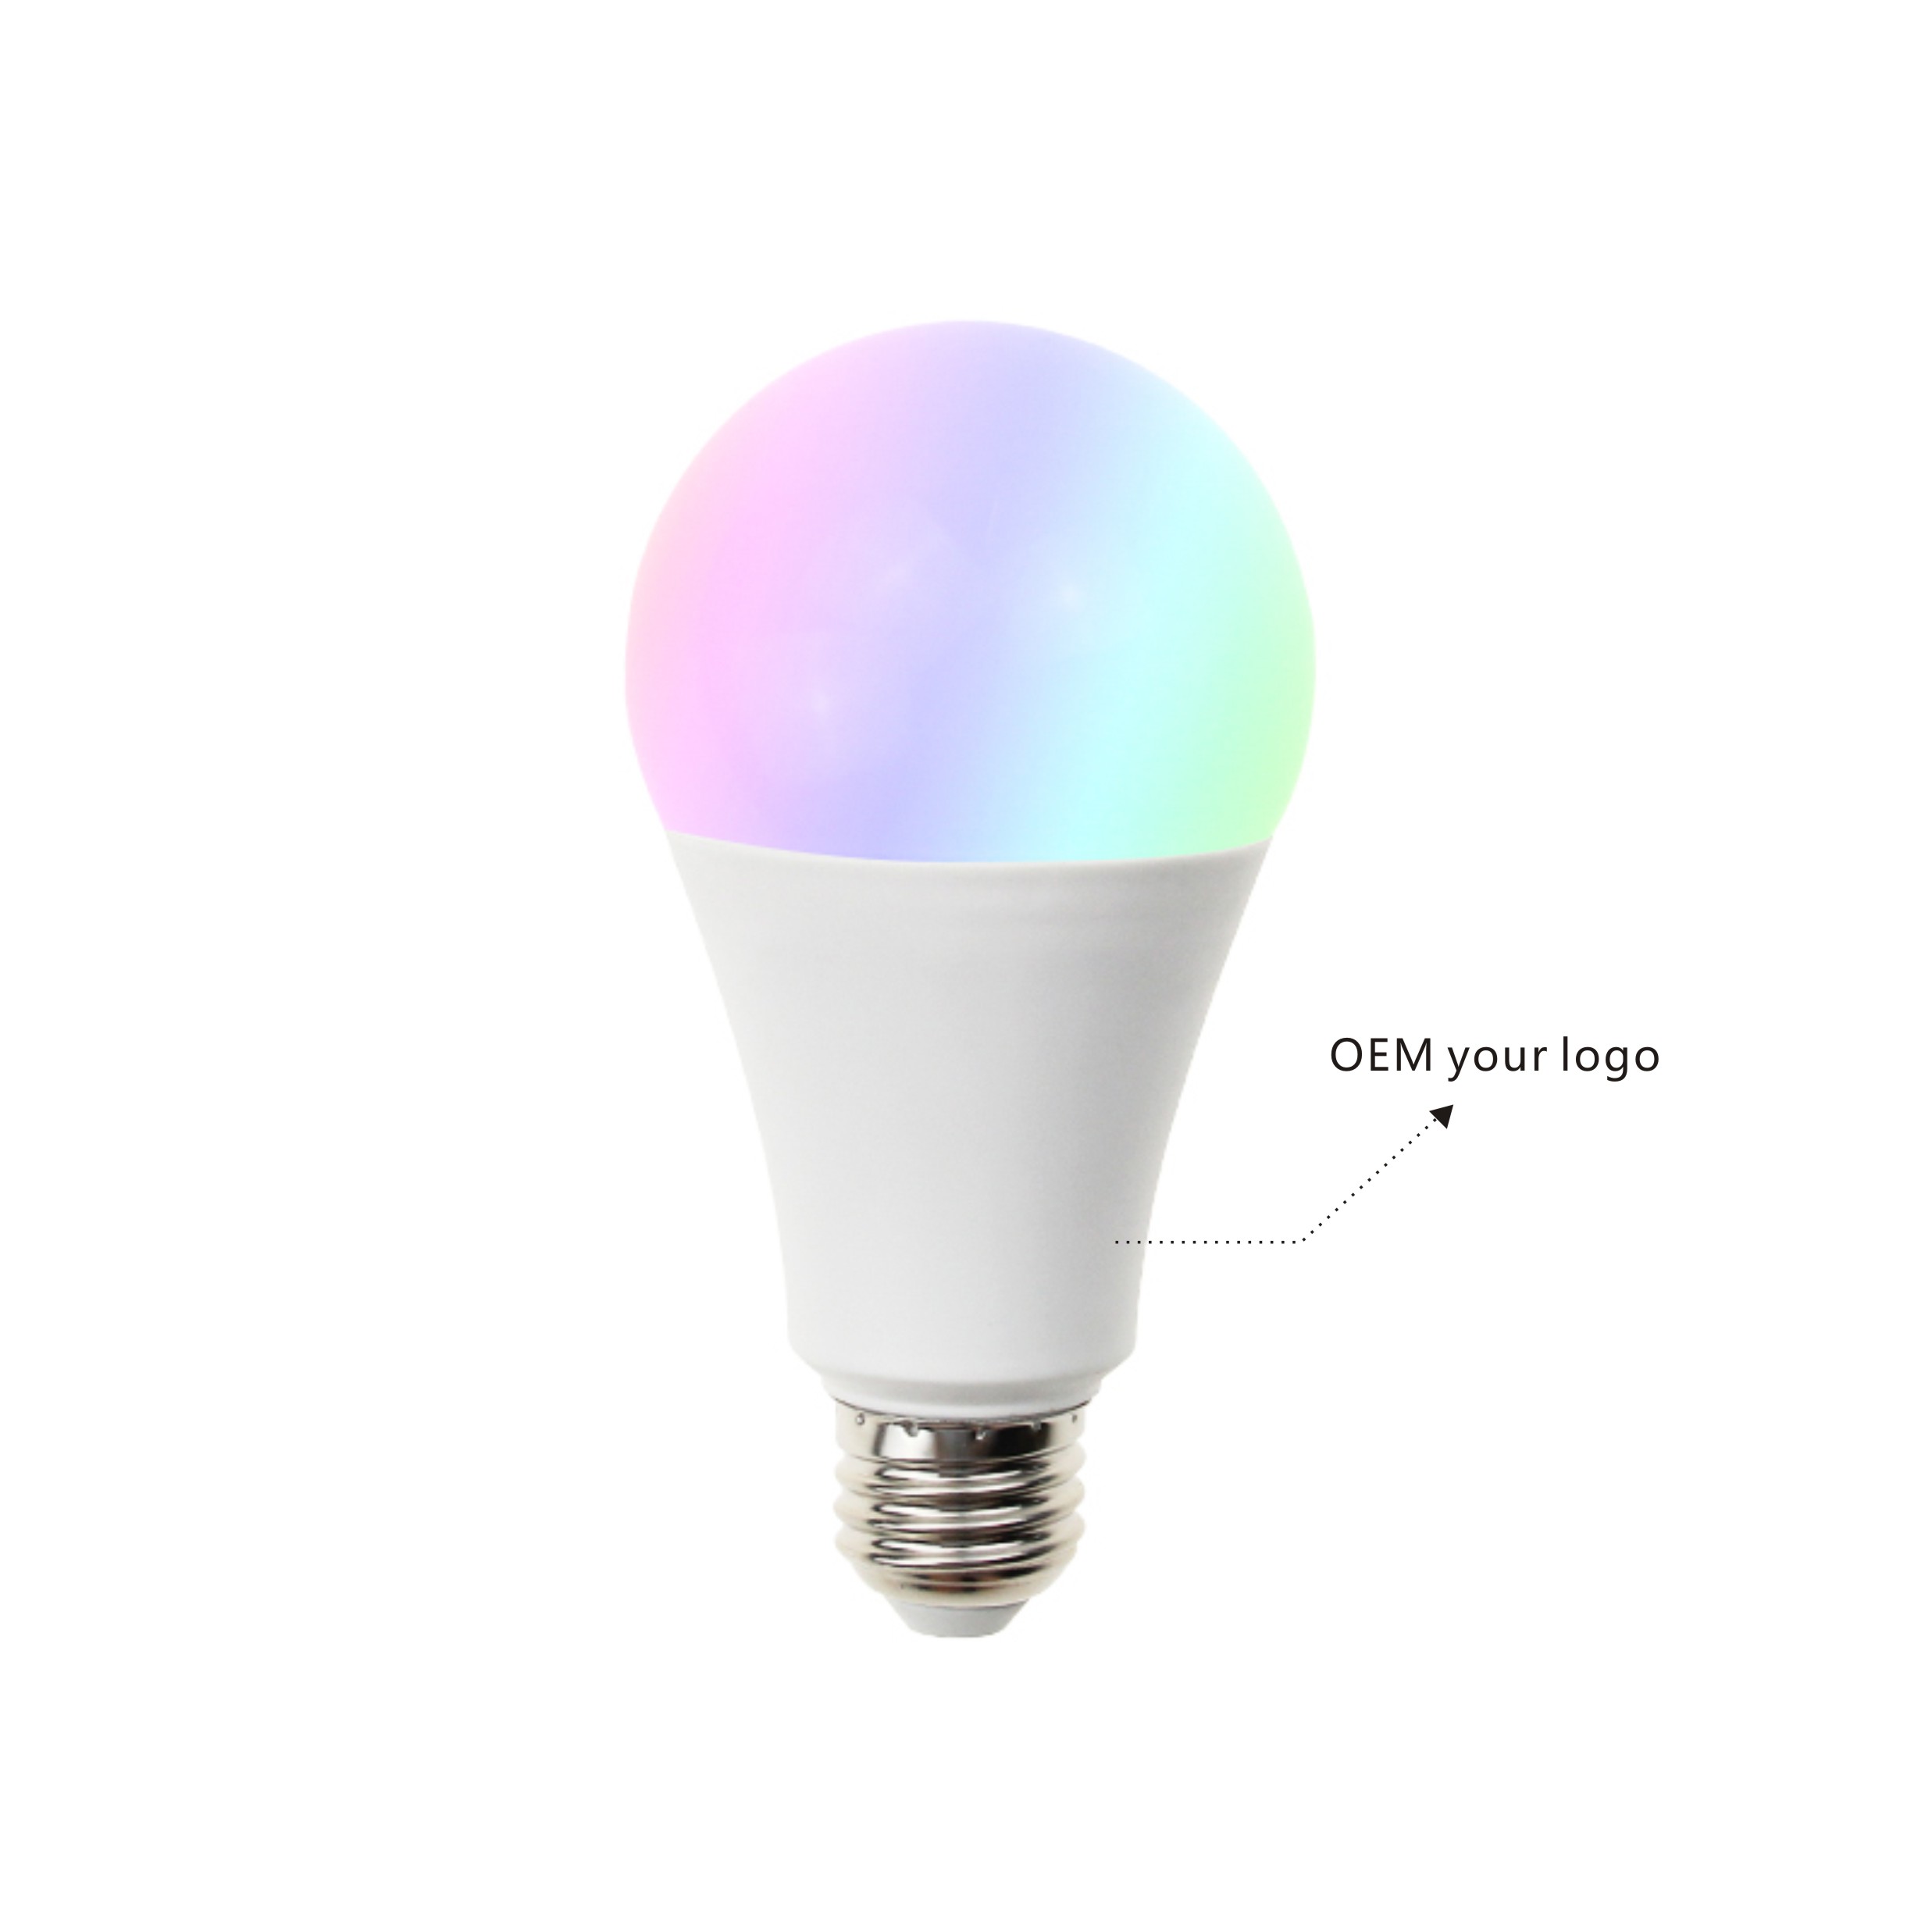 China supply most popular smart RGBCW LED bulb light lamp multi color light E27 7W 9W RGB LED bulb